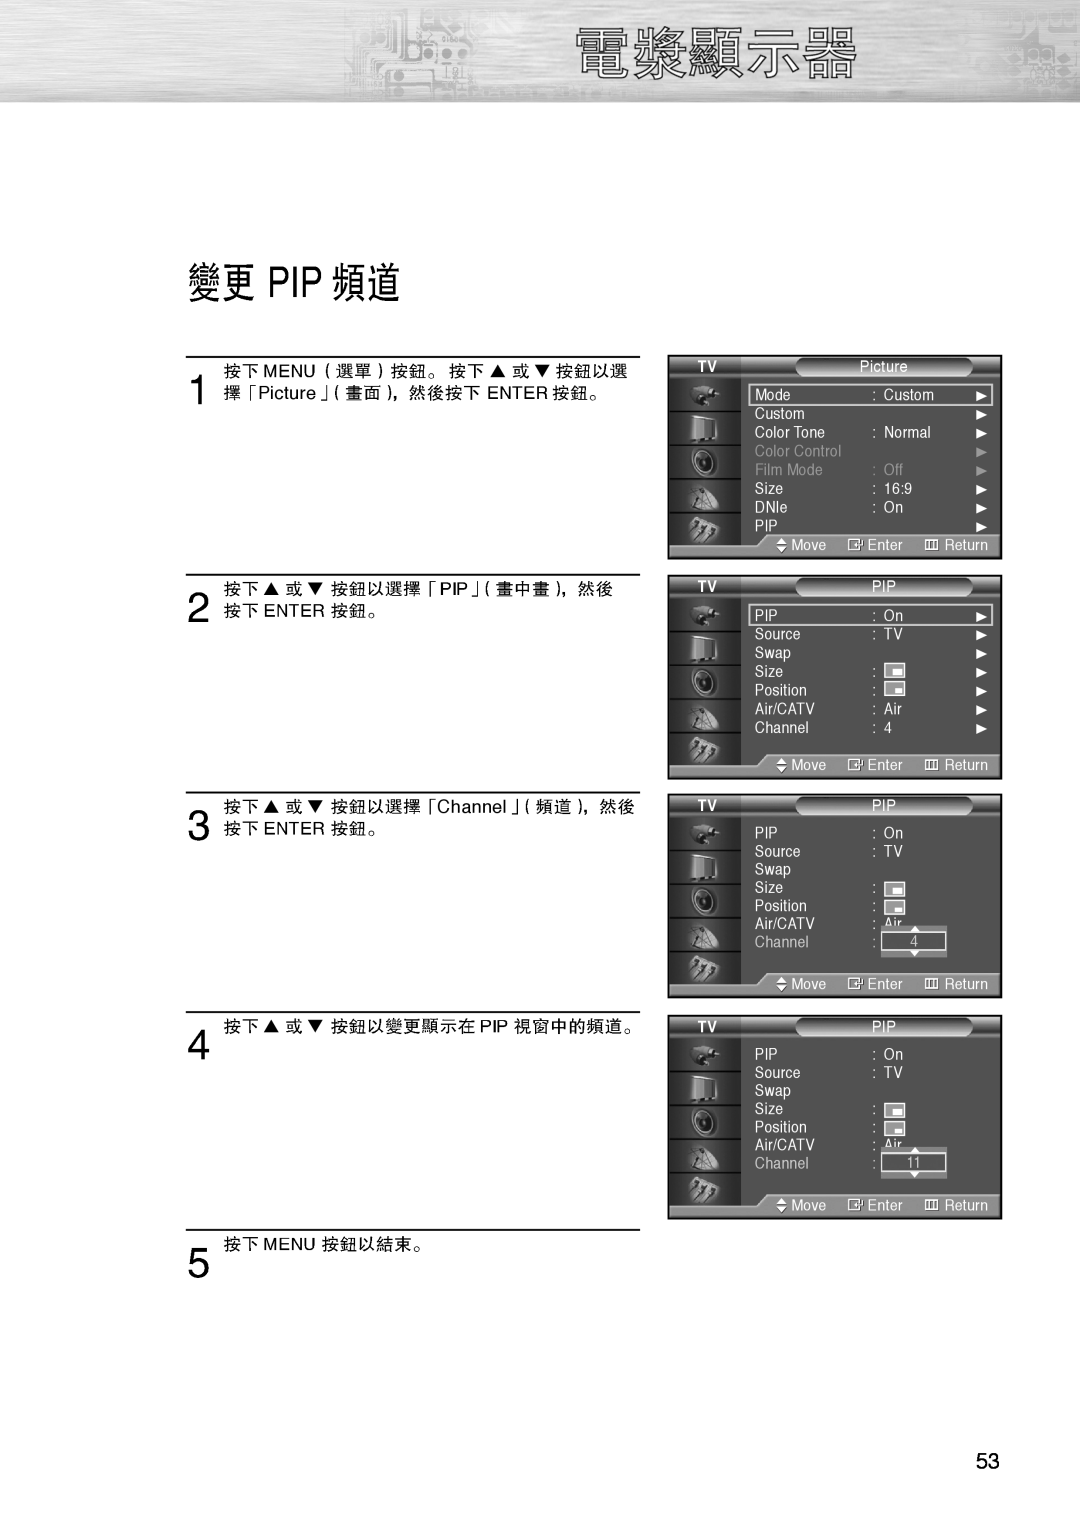 Samsung PL-42D4S manual Picture, Channel, Color Control, Film Mode 